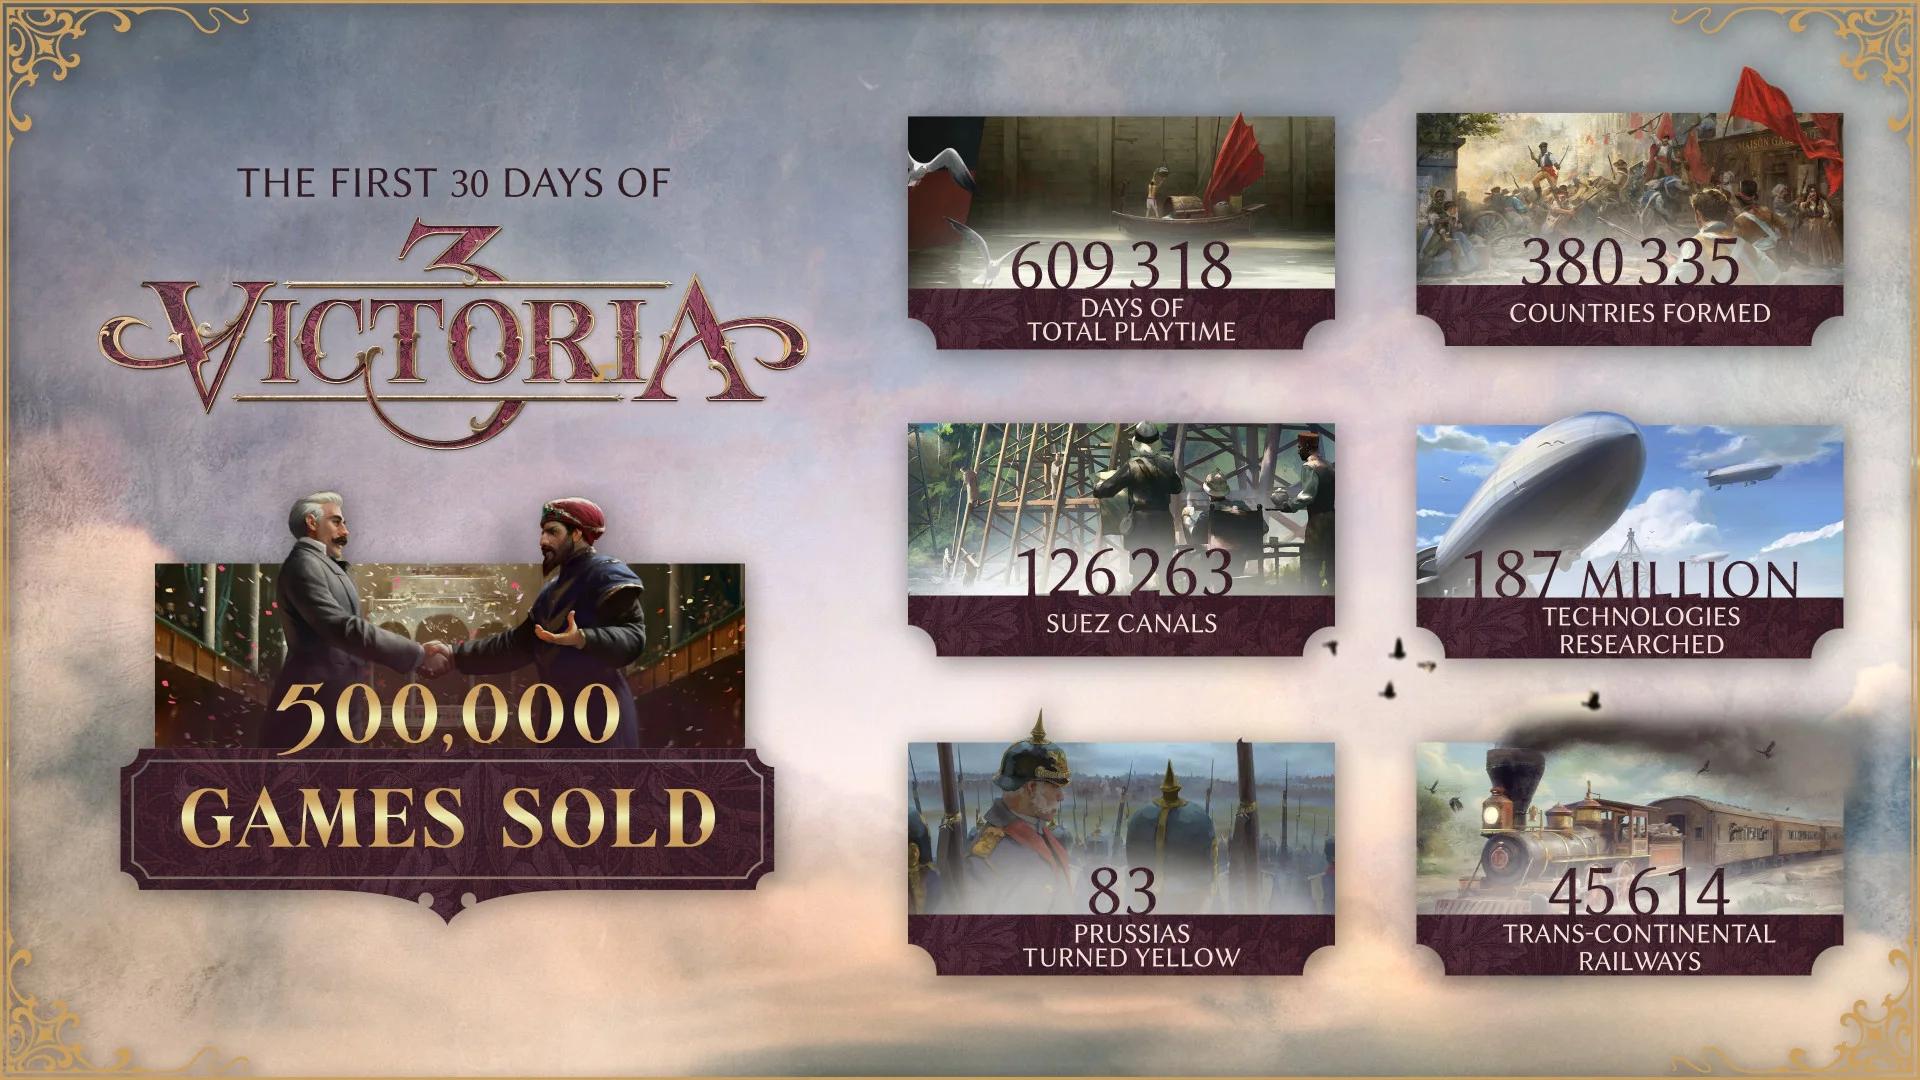 Продажи Victoria 3 за месяц составили 500 тыс копий - фото 1